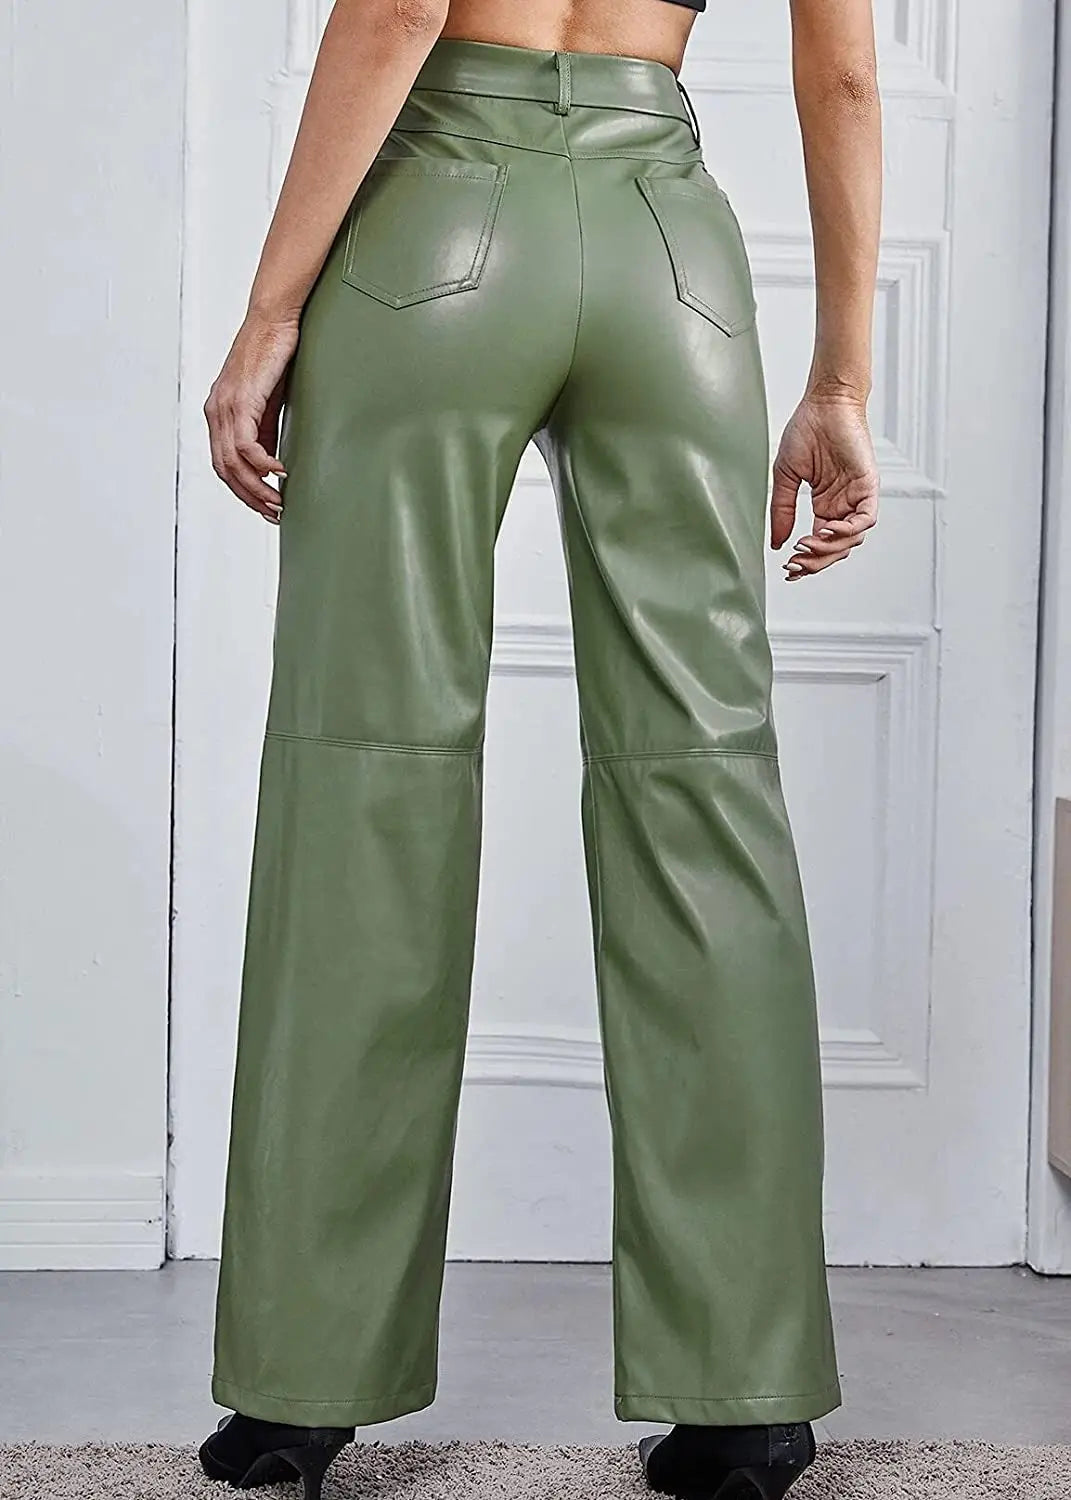 High-Waist Solid Splendor Pants